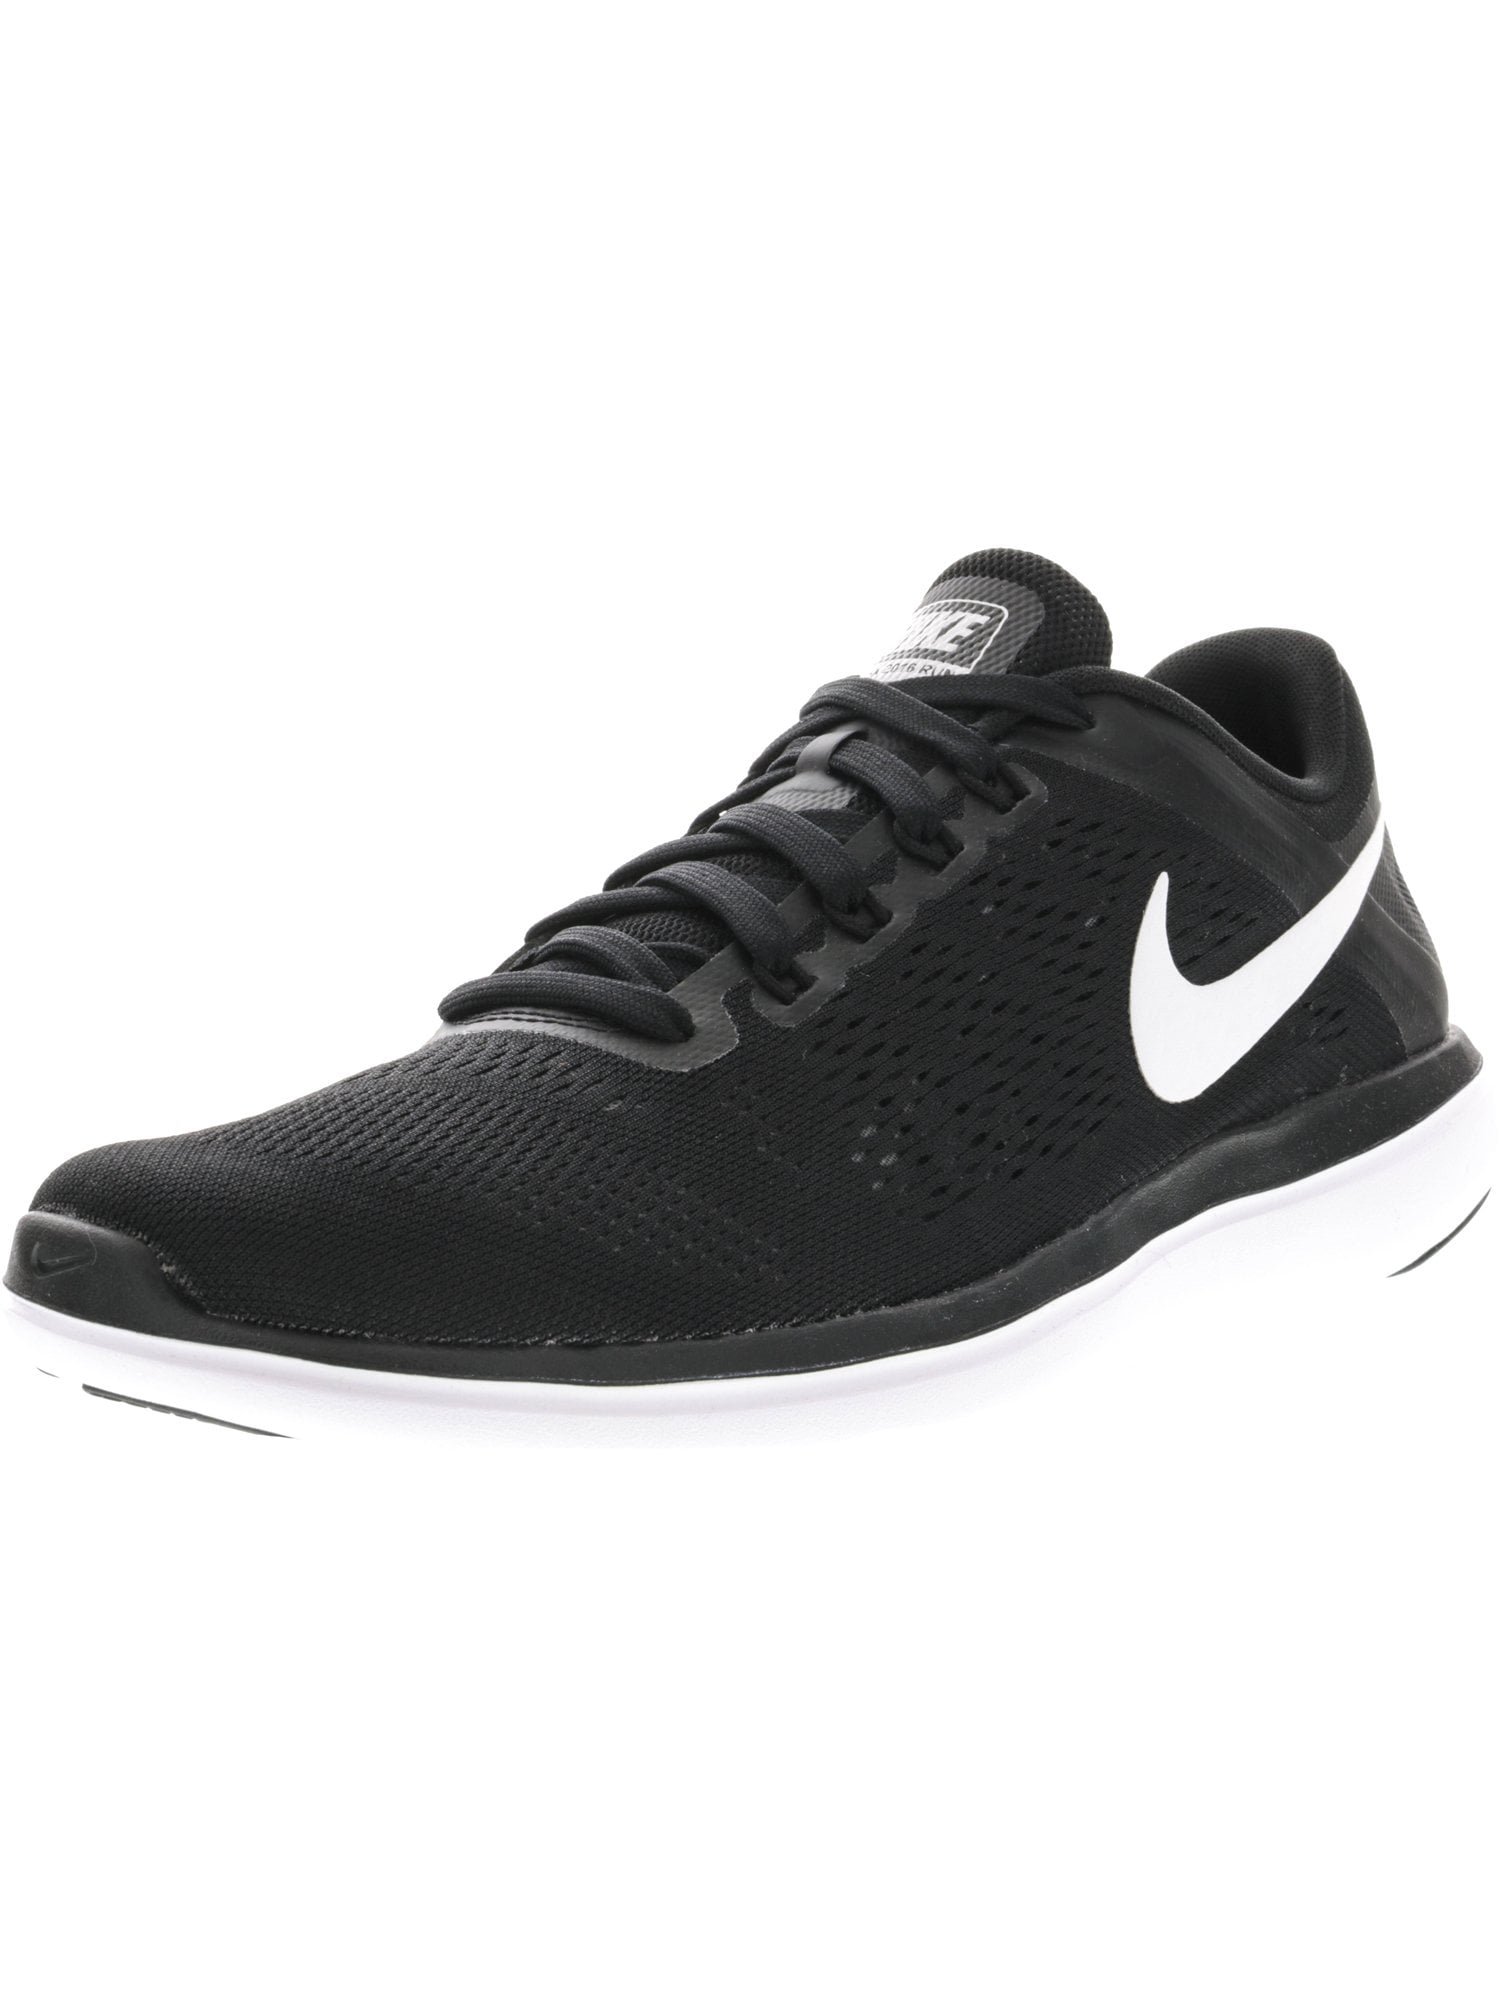 Men's Flex 2016 Rn Black / White-Cool Grey Running Shoe - 12M -